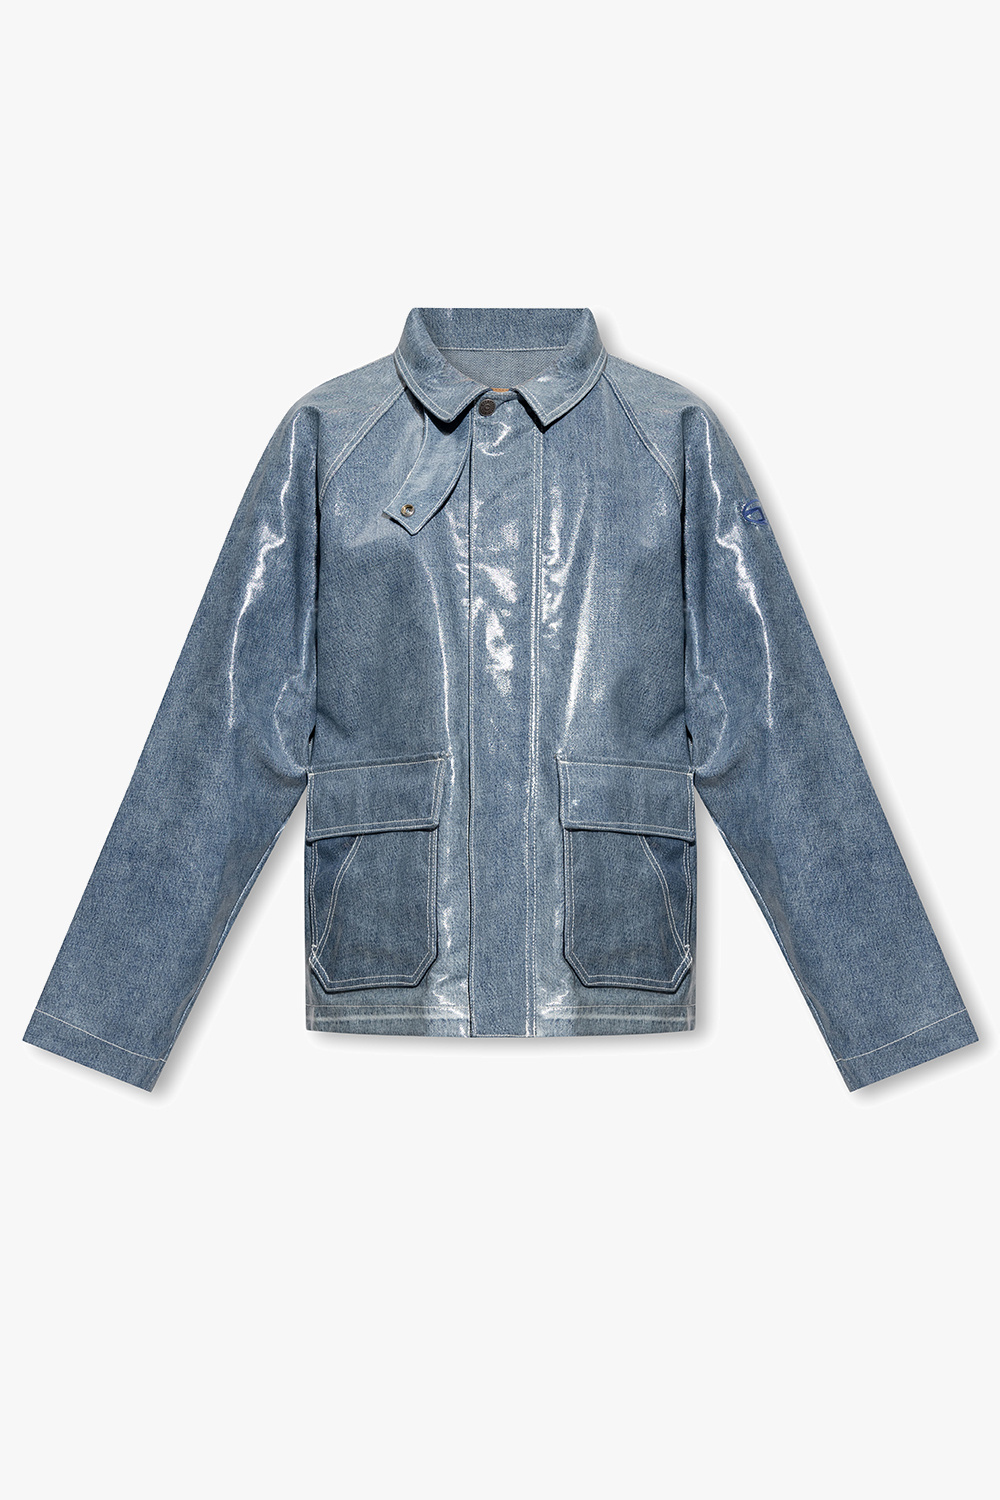 Diesel ‘D-SURY’ Monterey jacket